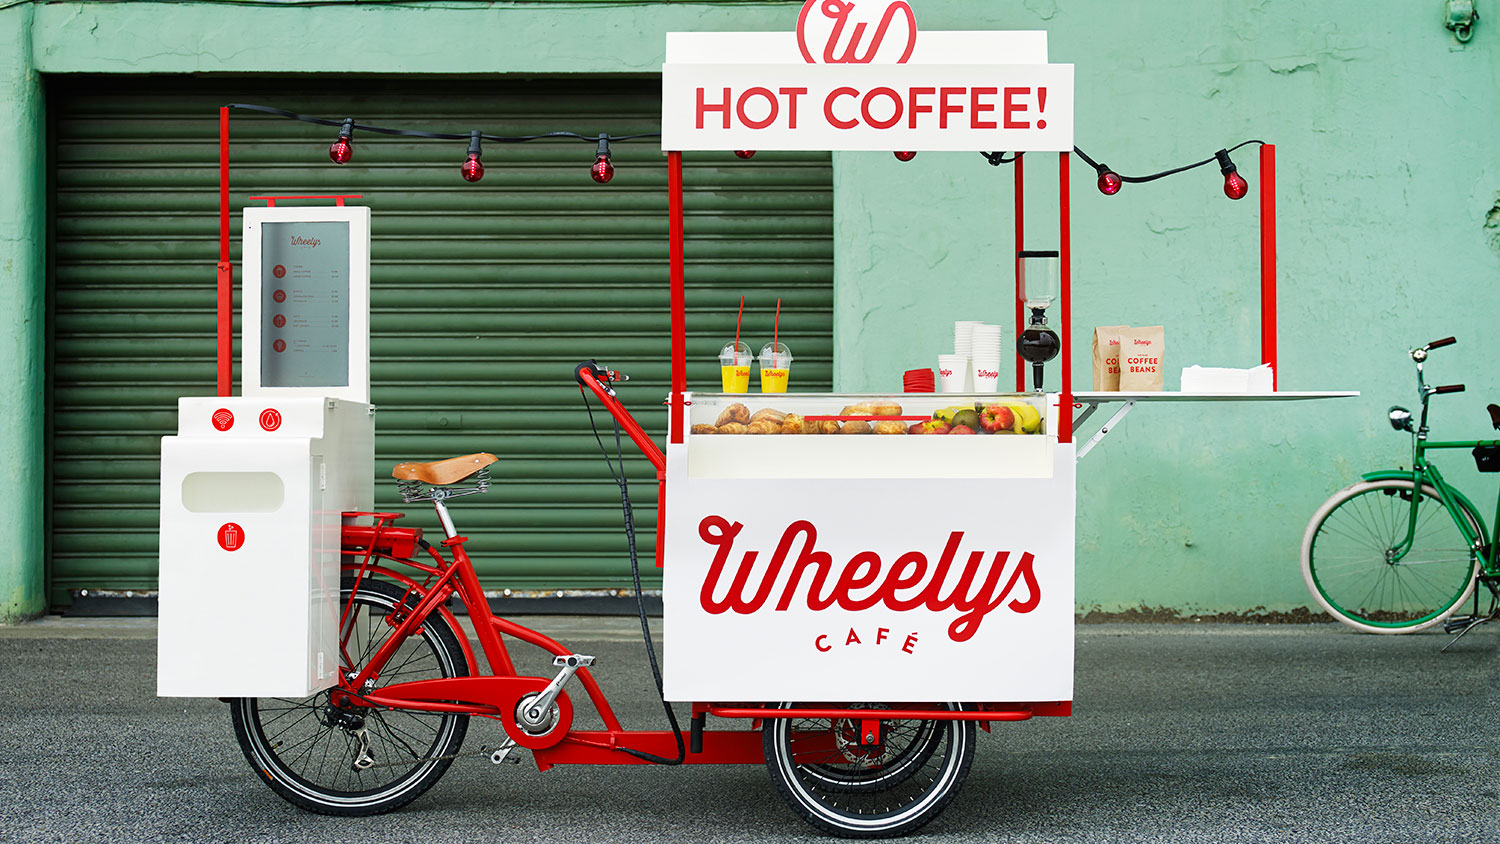 Wheelys Cafe